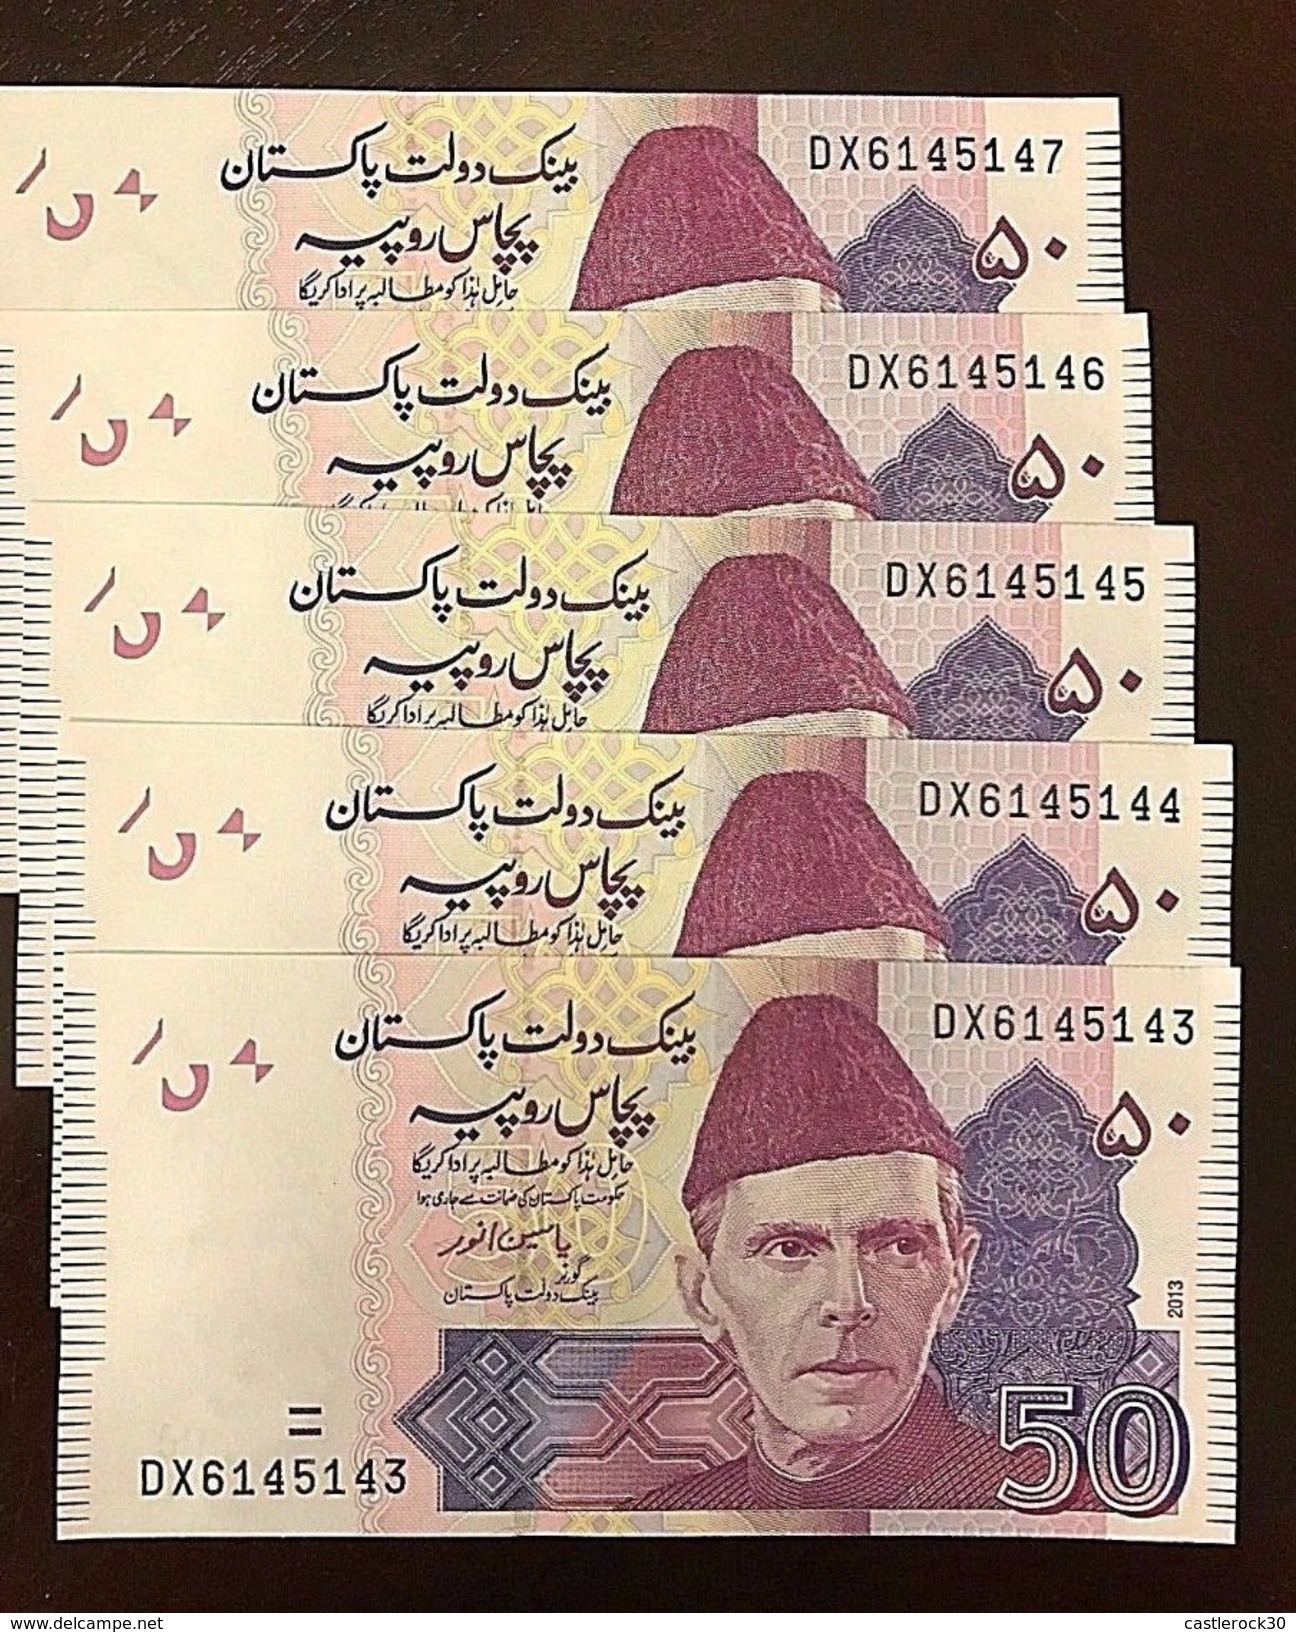 RC) PAKISTAN BANK NOTES 50 RUPEES ND 2013 - Pakistan